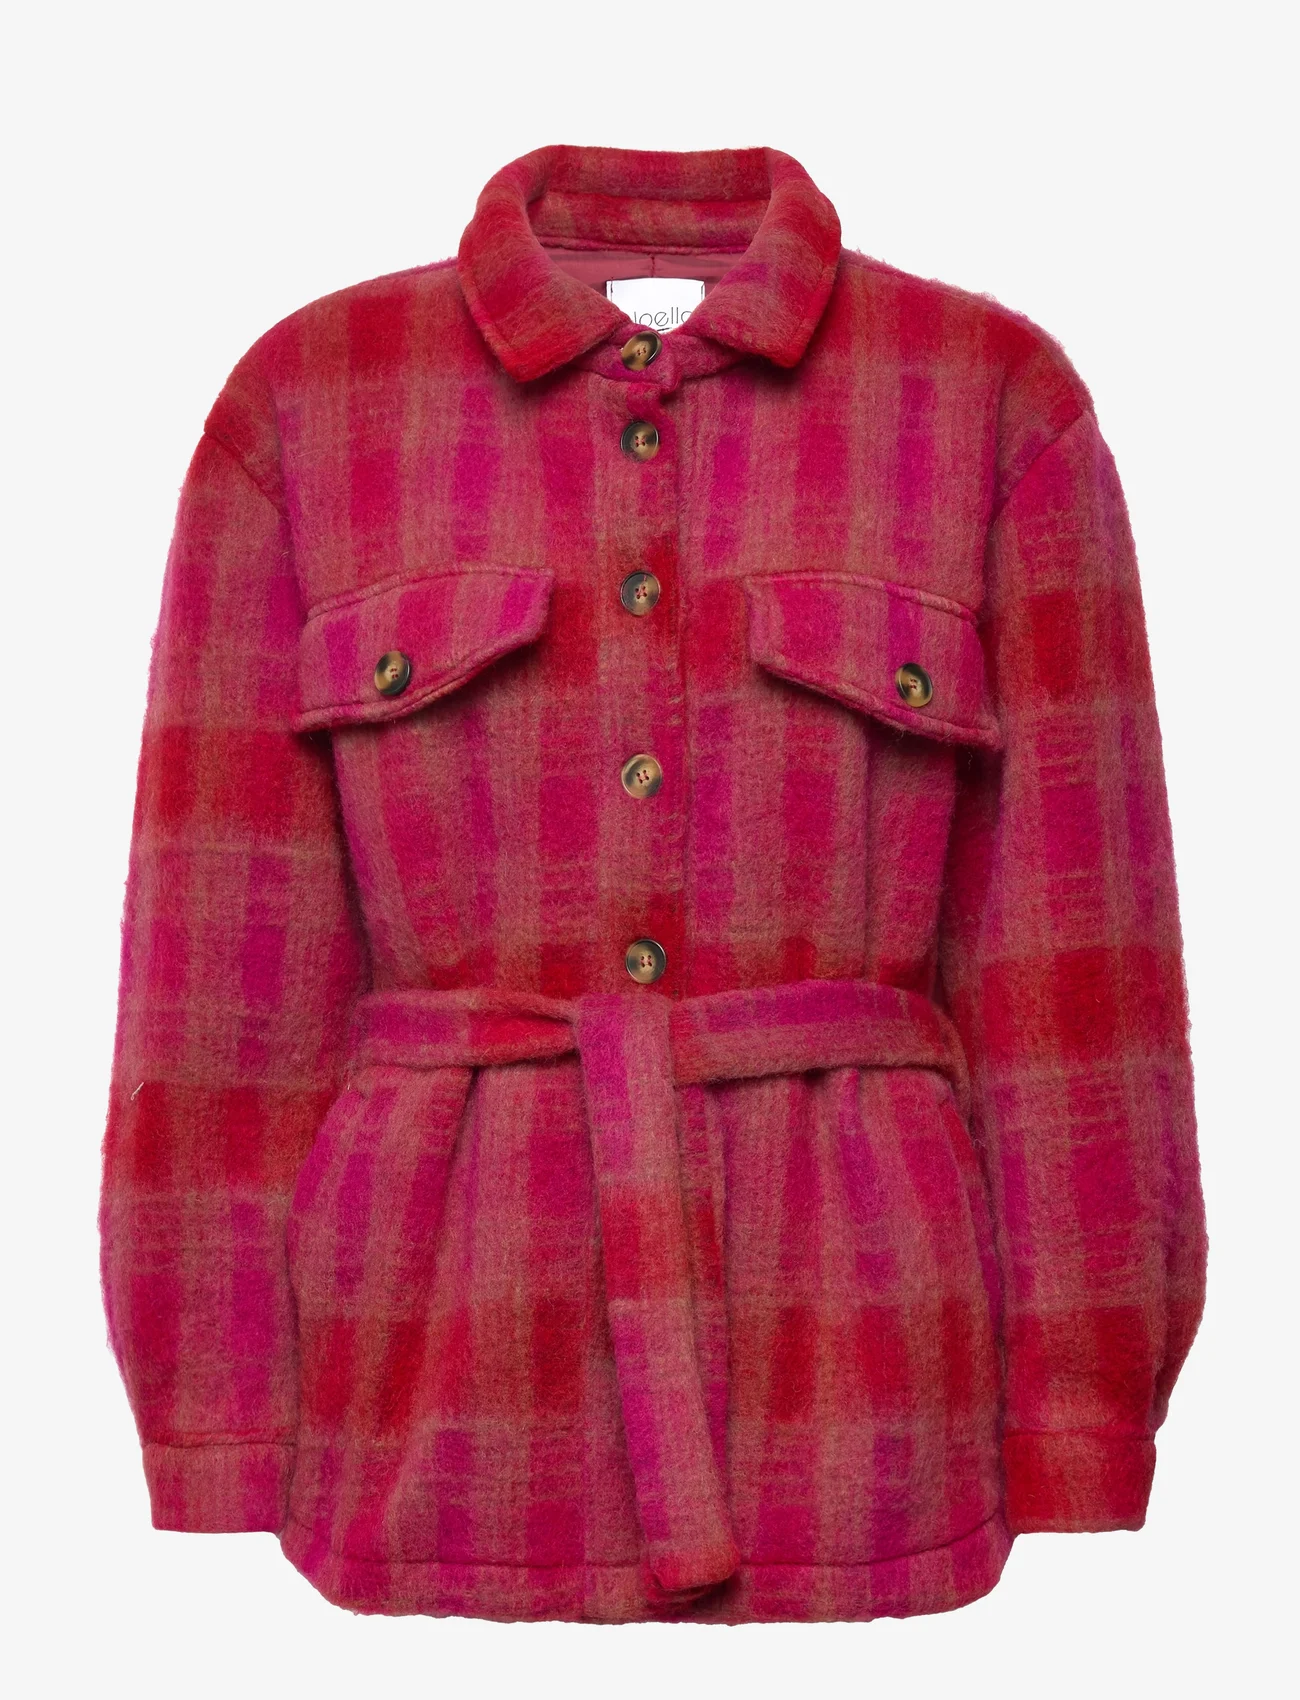 Noella - Koi Shirt Jacket - talvitakit - pink/red checks - 0